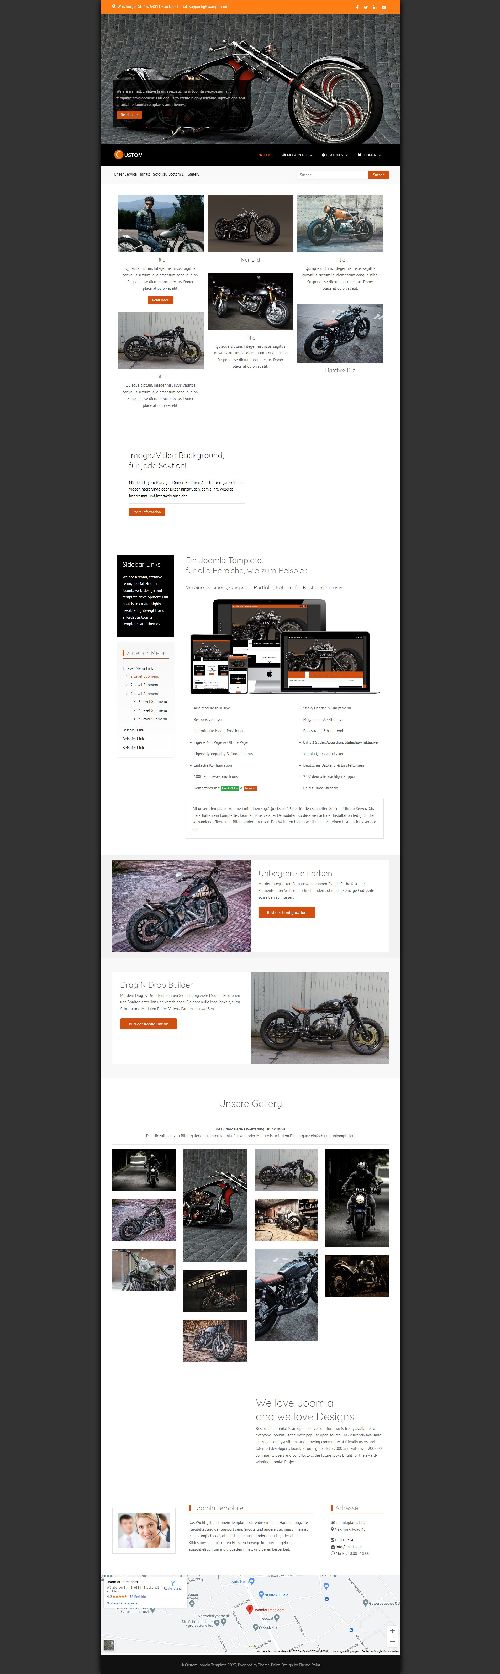 Custom - Professional Bikes & Motocycles Joomla Template